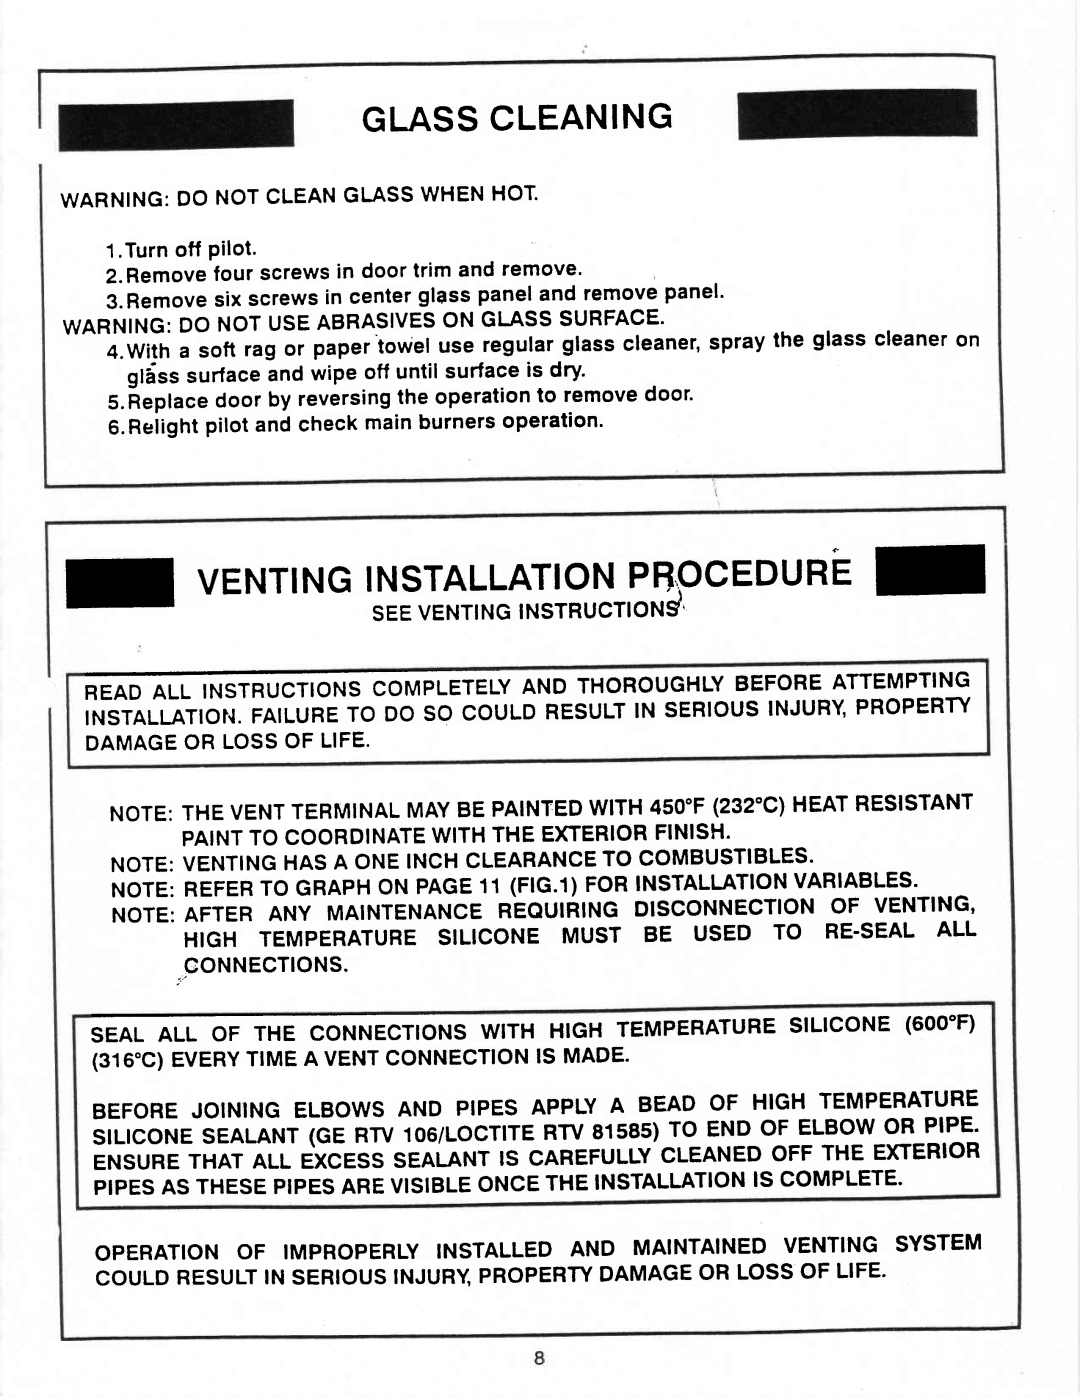 Vermont Casting G600 manual I VENTINGl,J,flhT*Ii?,i,B\OCEDURE, Glasscleaning 